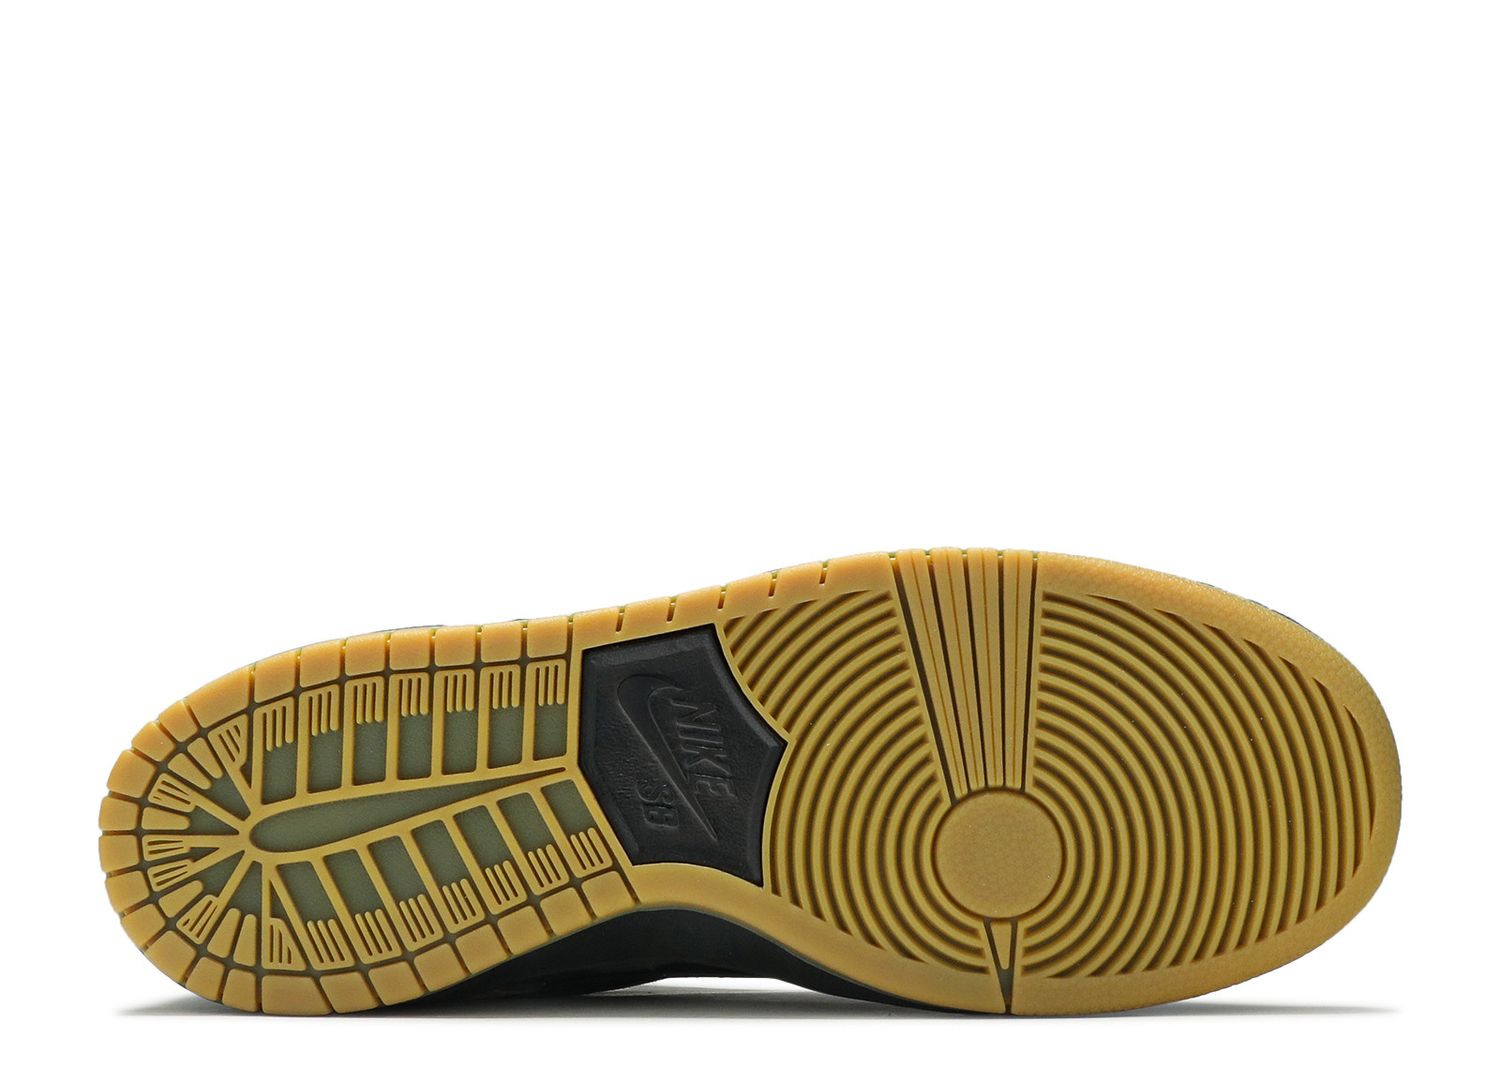 Zoom Dunk Low Pro SB 'Camo' - Nike - 854866 209 - medium olive/black ...